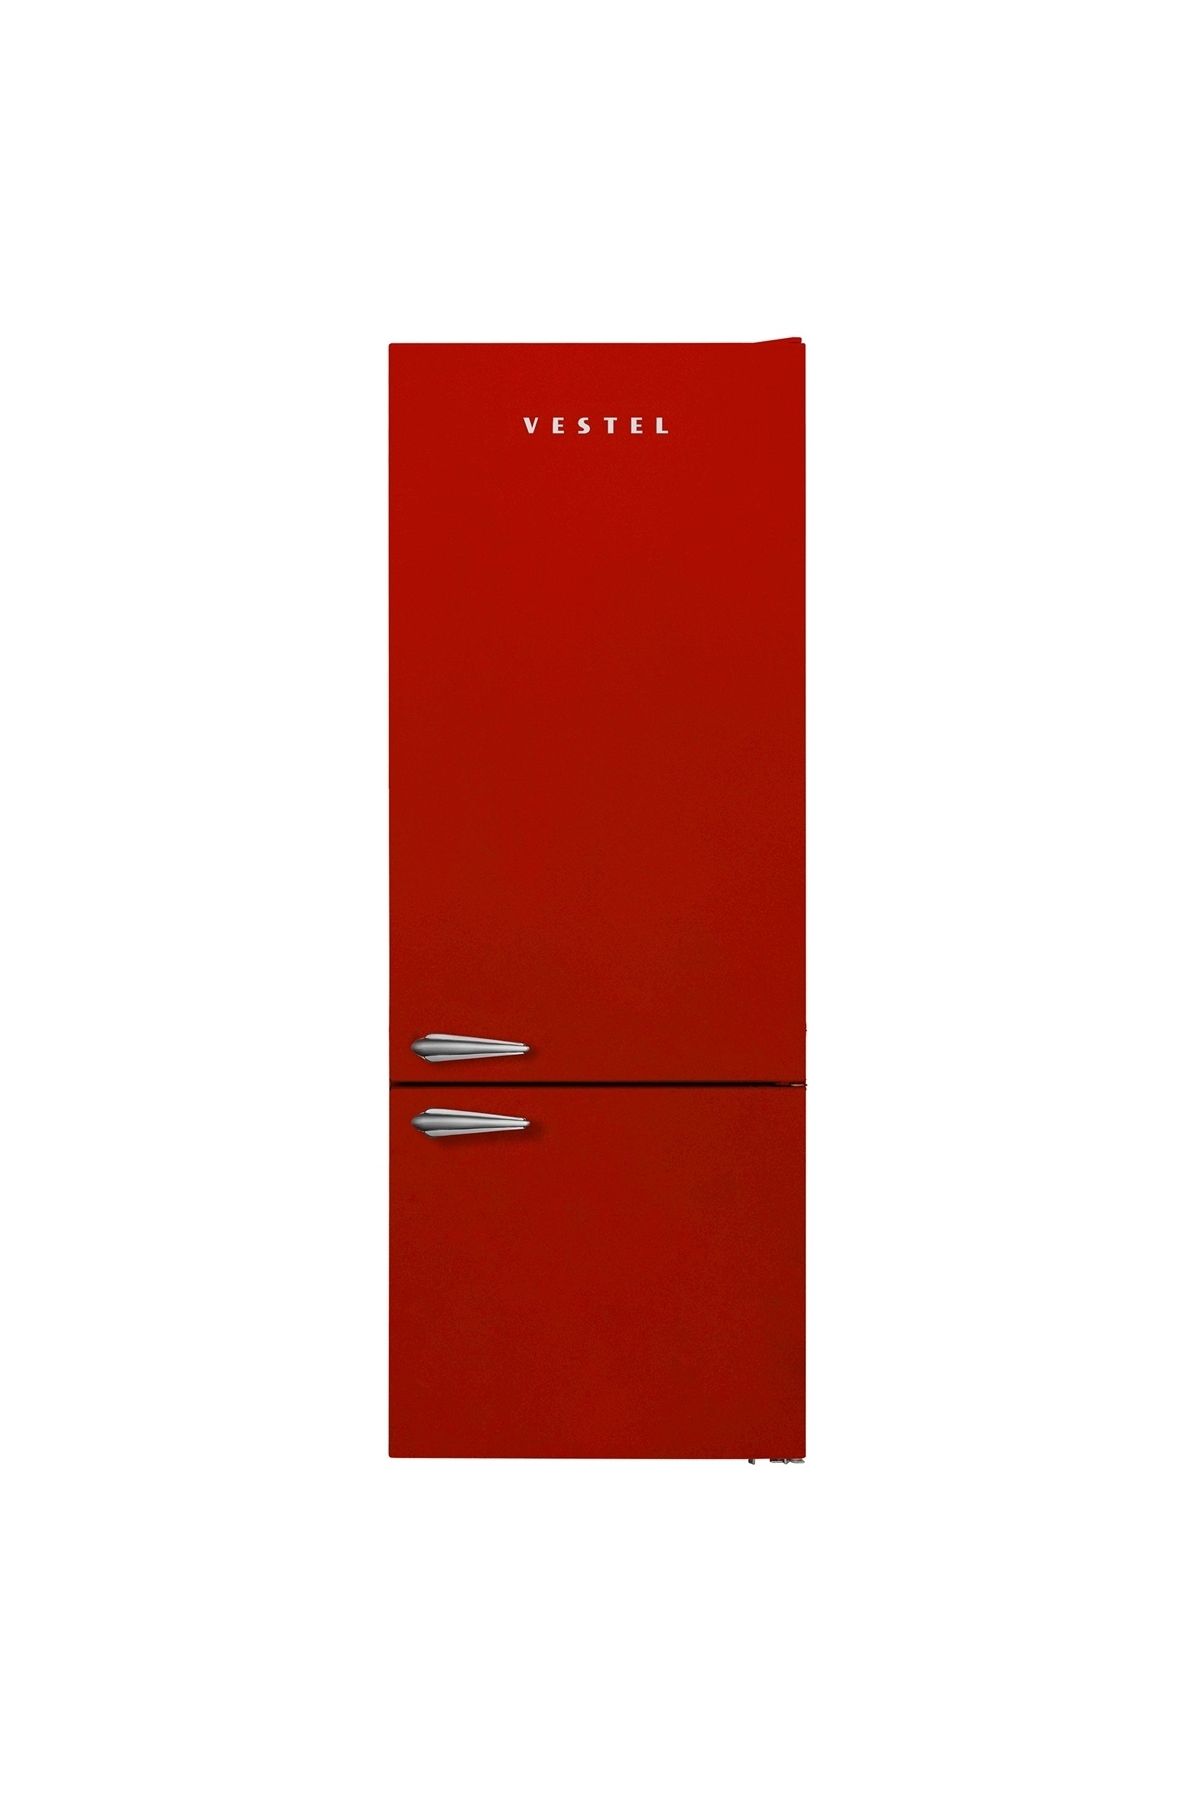 VESTEL Retro Nfk52101 Kırmızı Buzdolabı